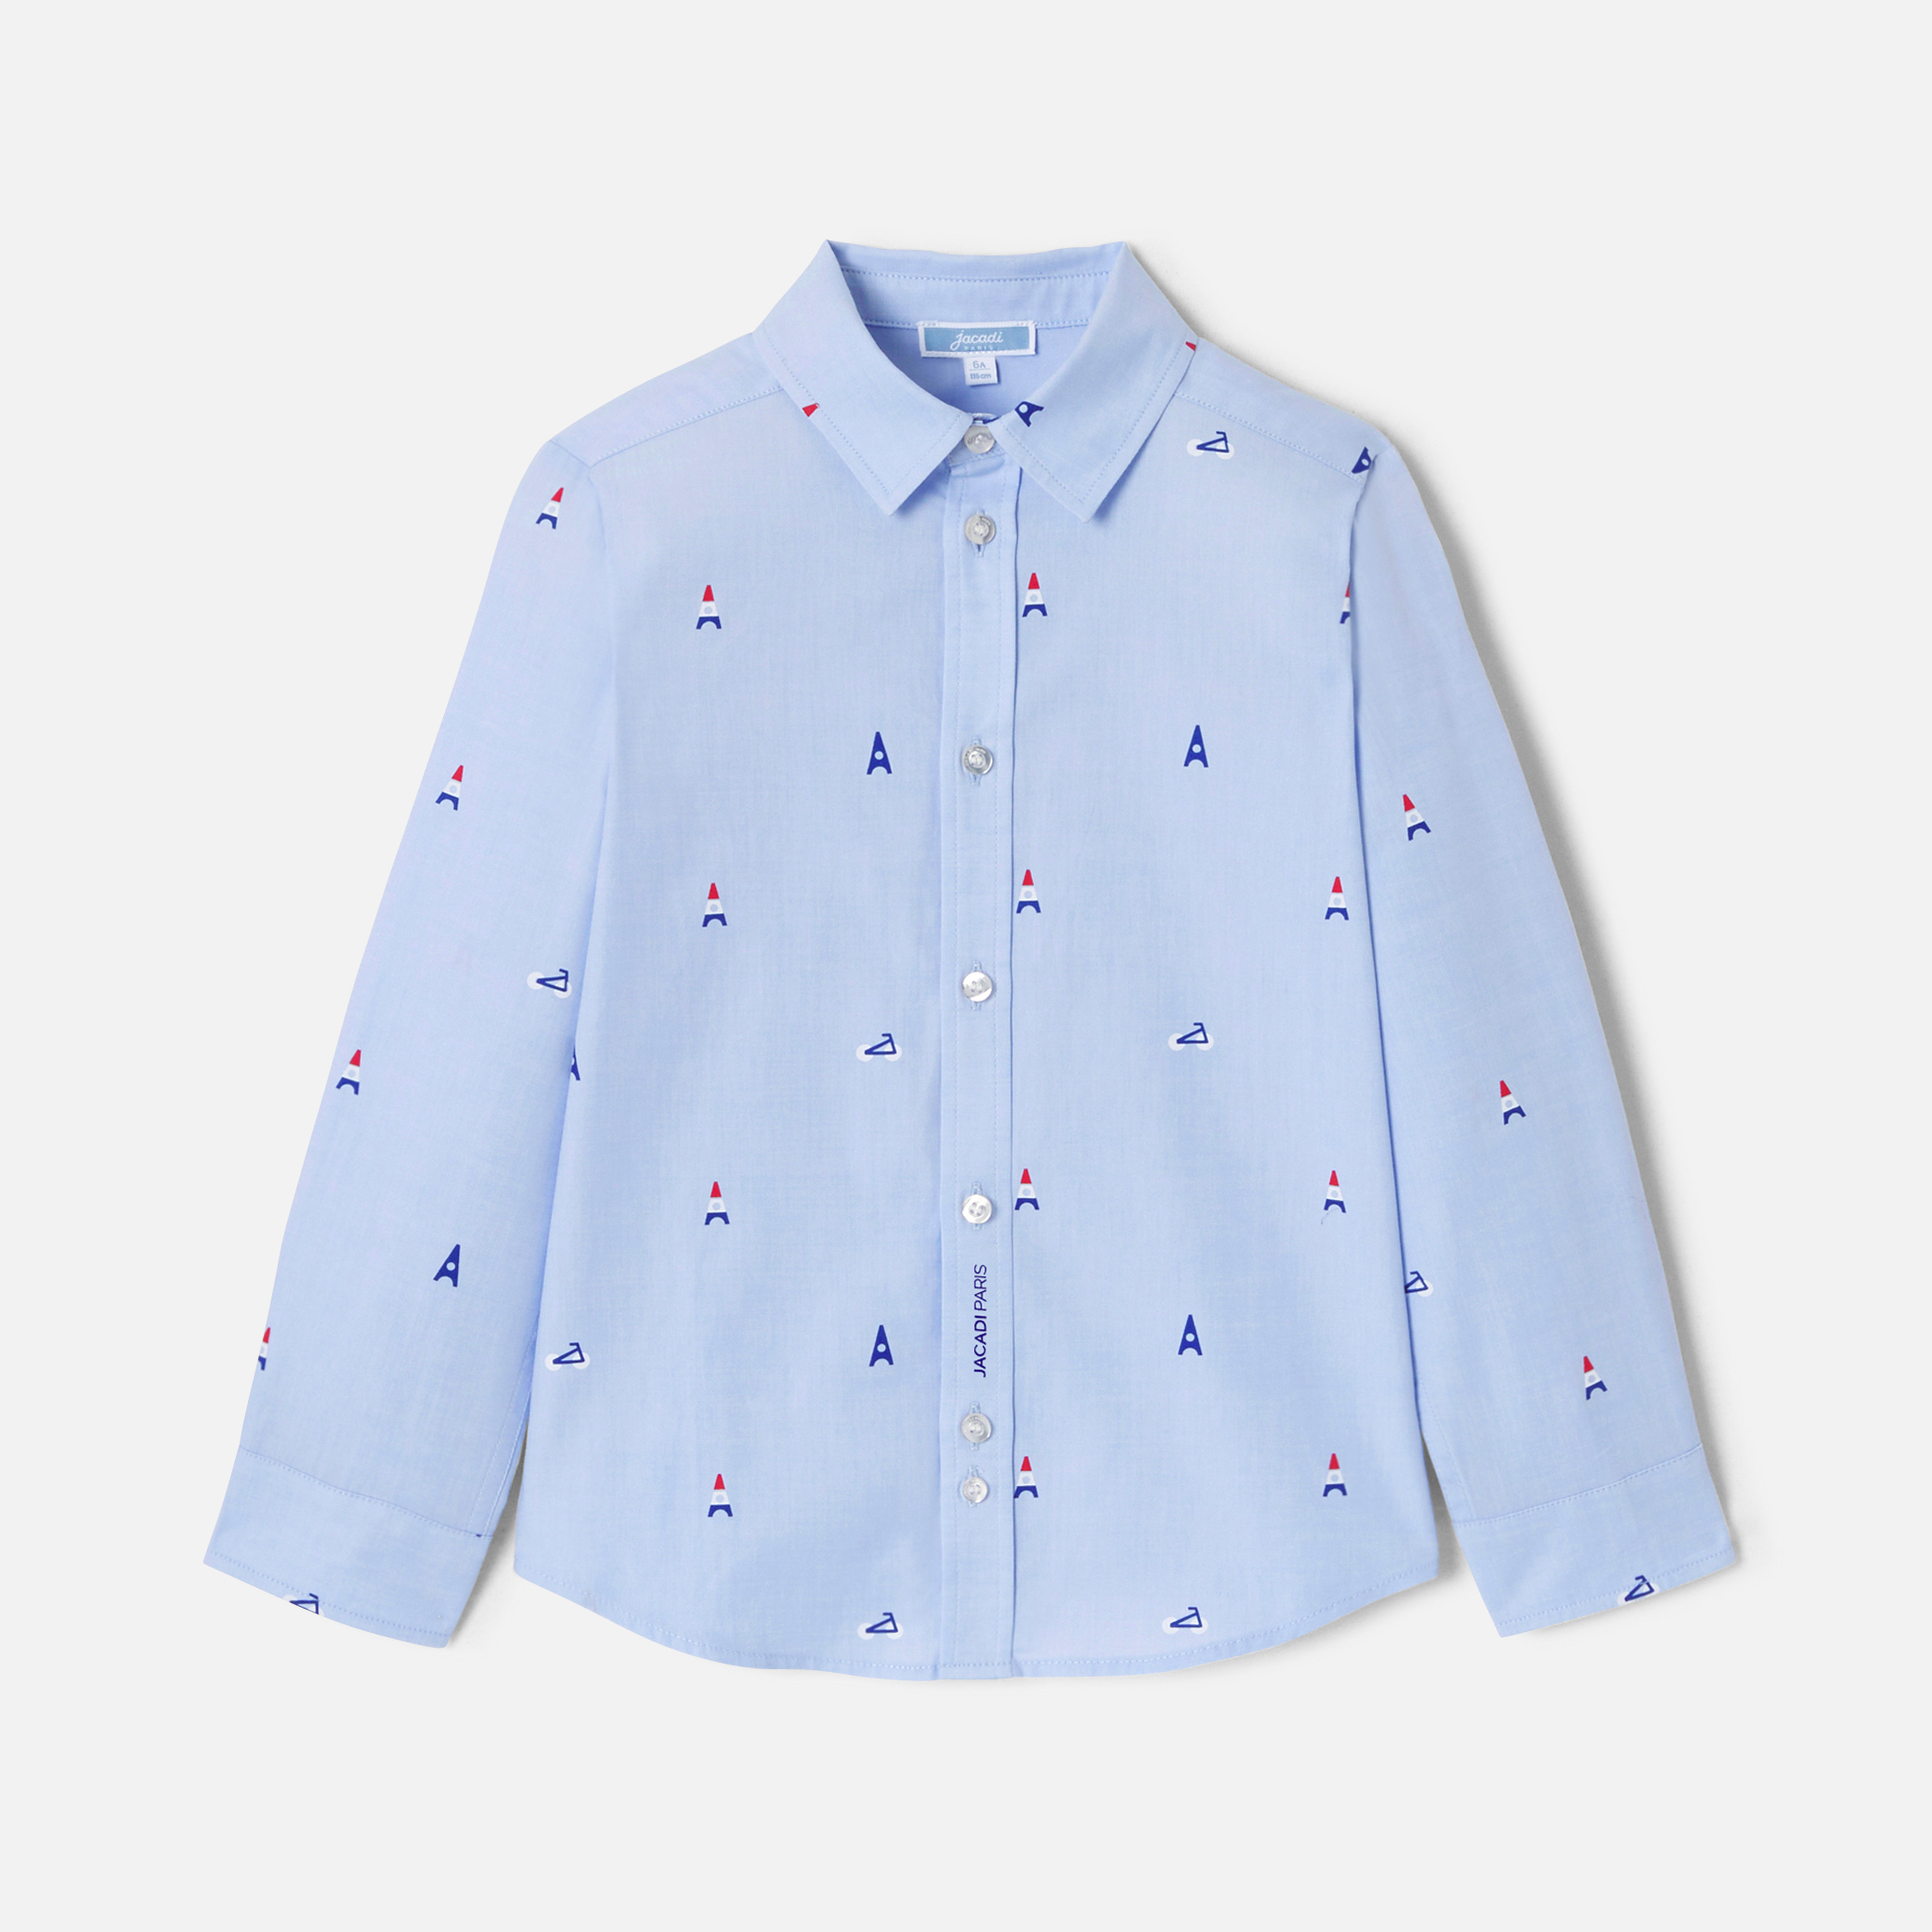 Boy shirt with Parisian motifs